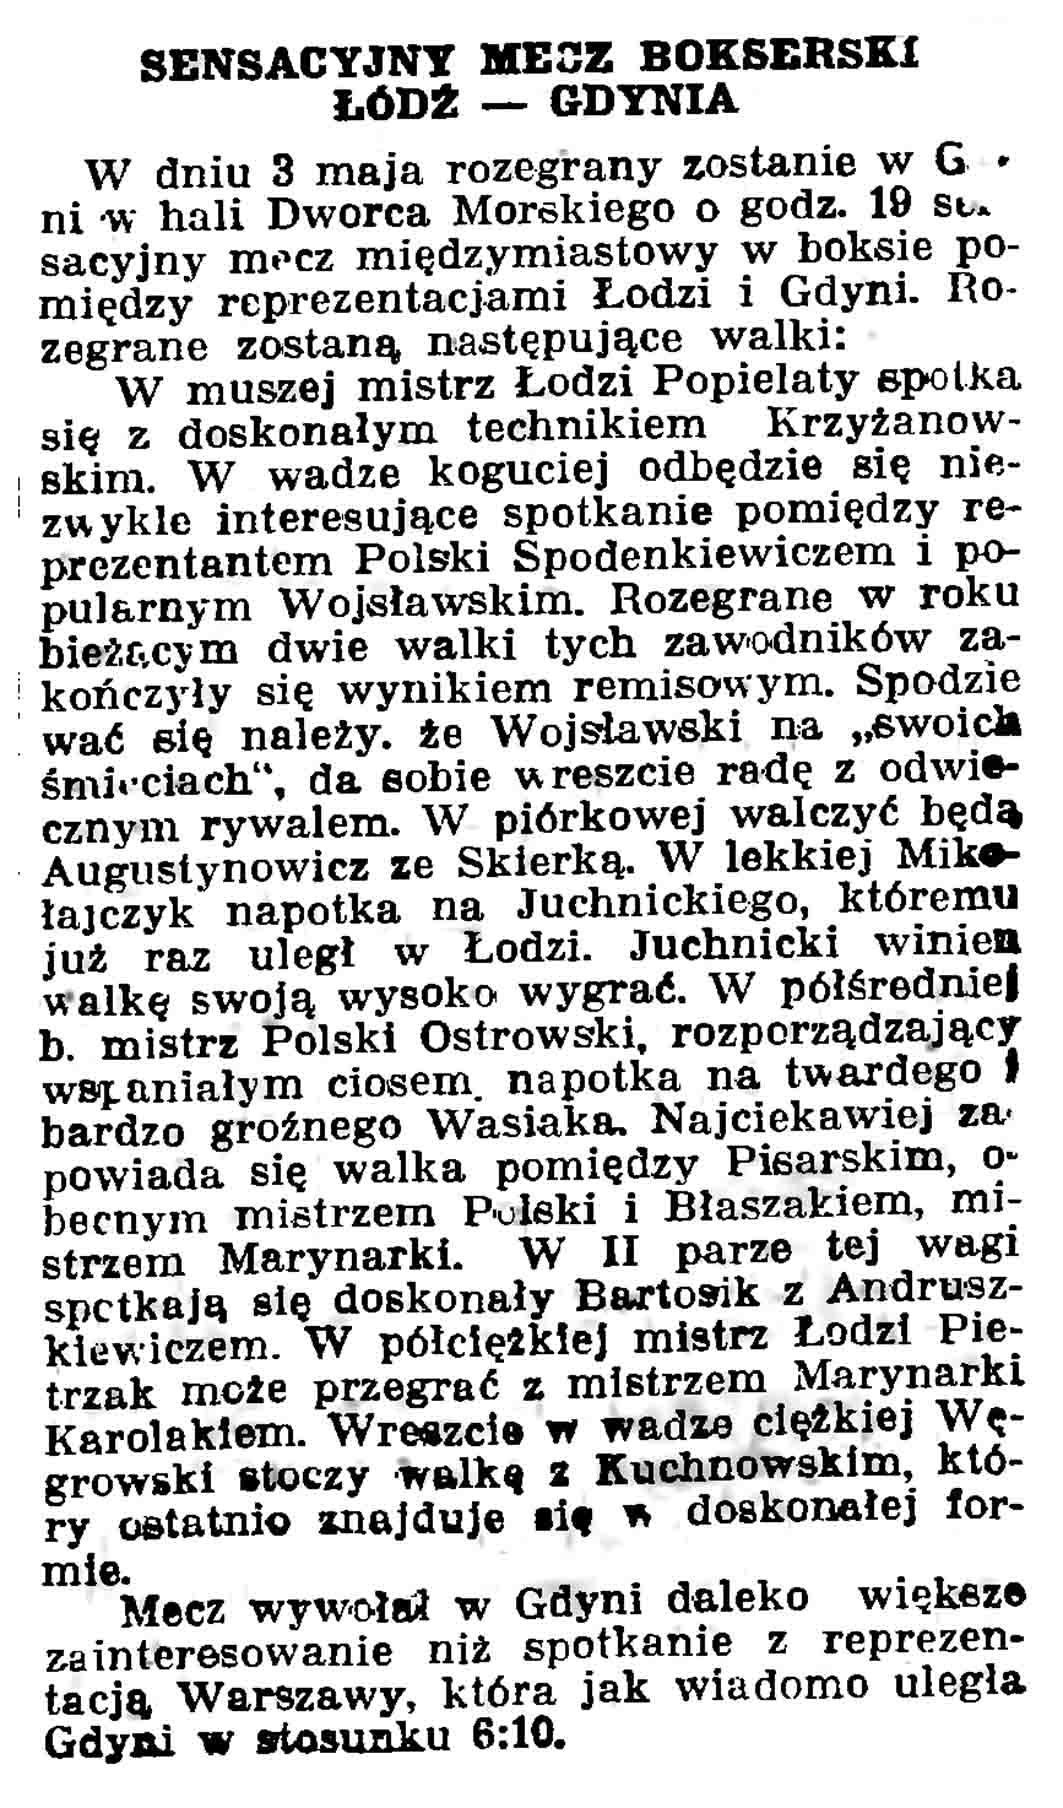 Sensacyjny mecz bokserski Łódź - Gdynia // Gazeta Gdańska. - 1937, nr 100, s. 9